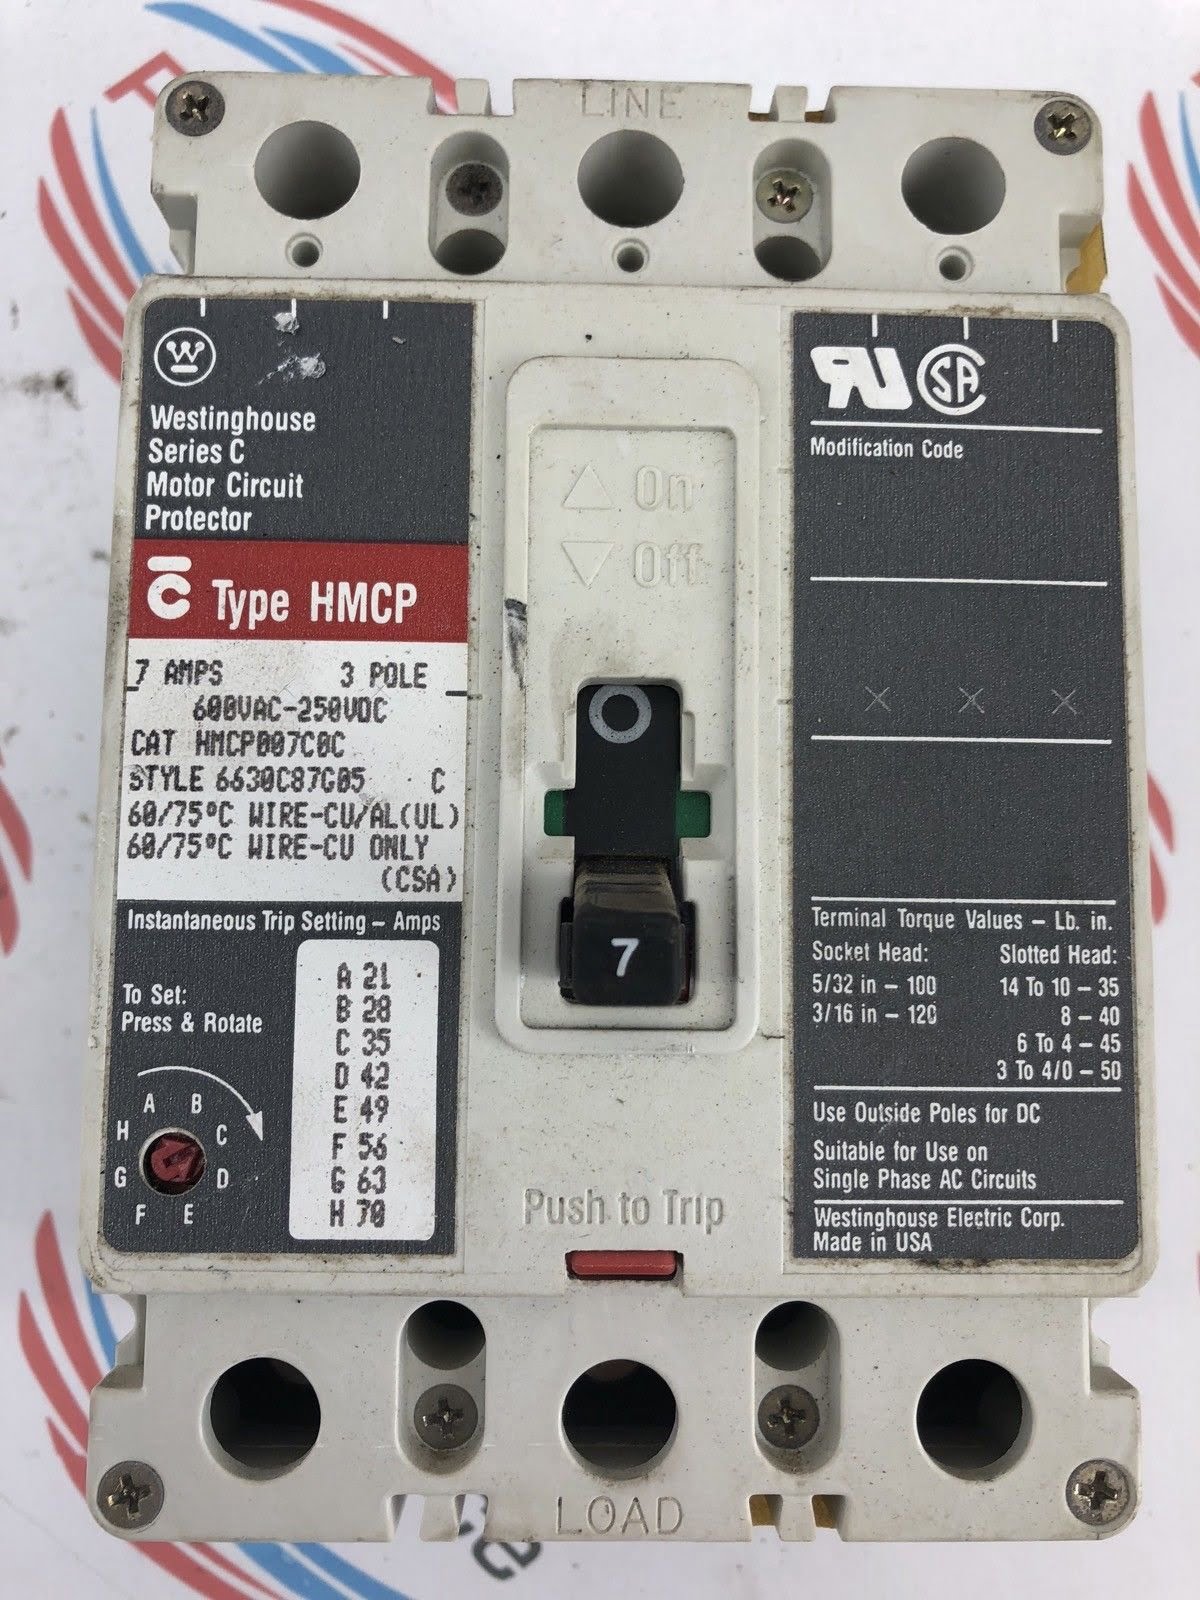 HMCP TYPE Details about   Westinghouse 3 Pole 7AMP 600V Motor Circuit Protector HMCP007C0C 